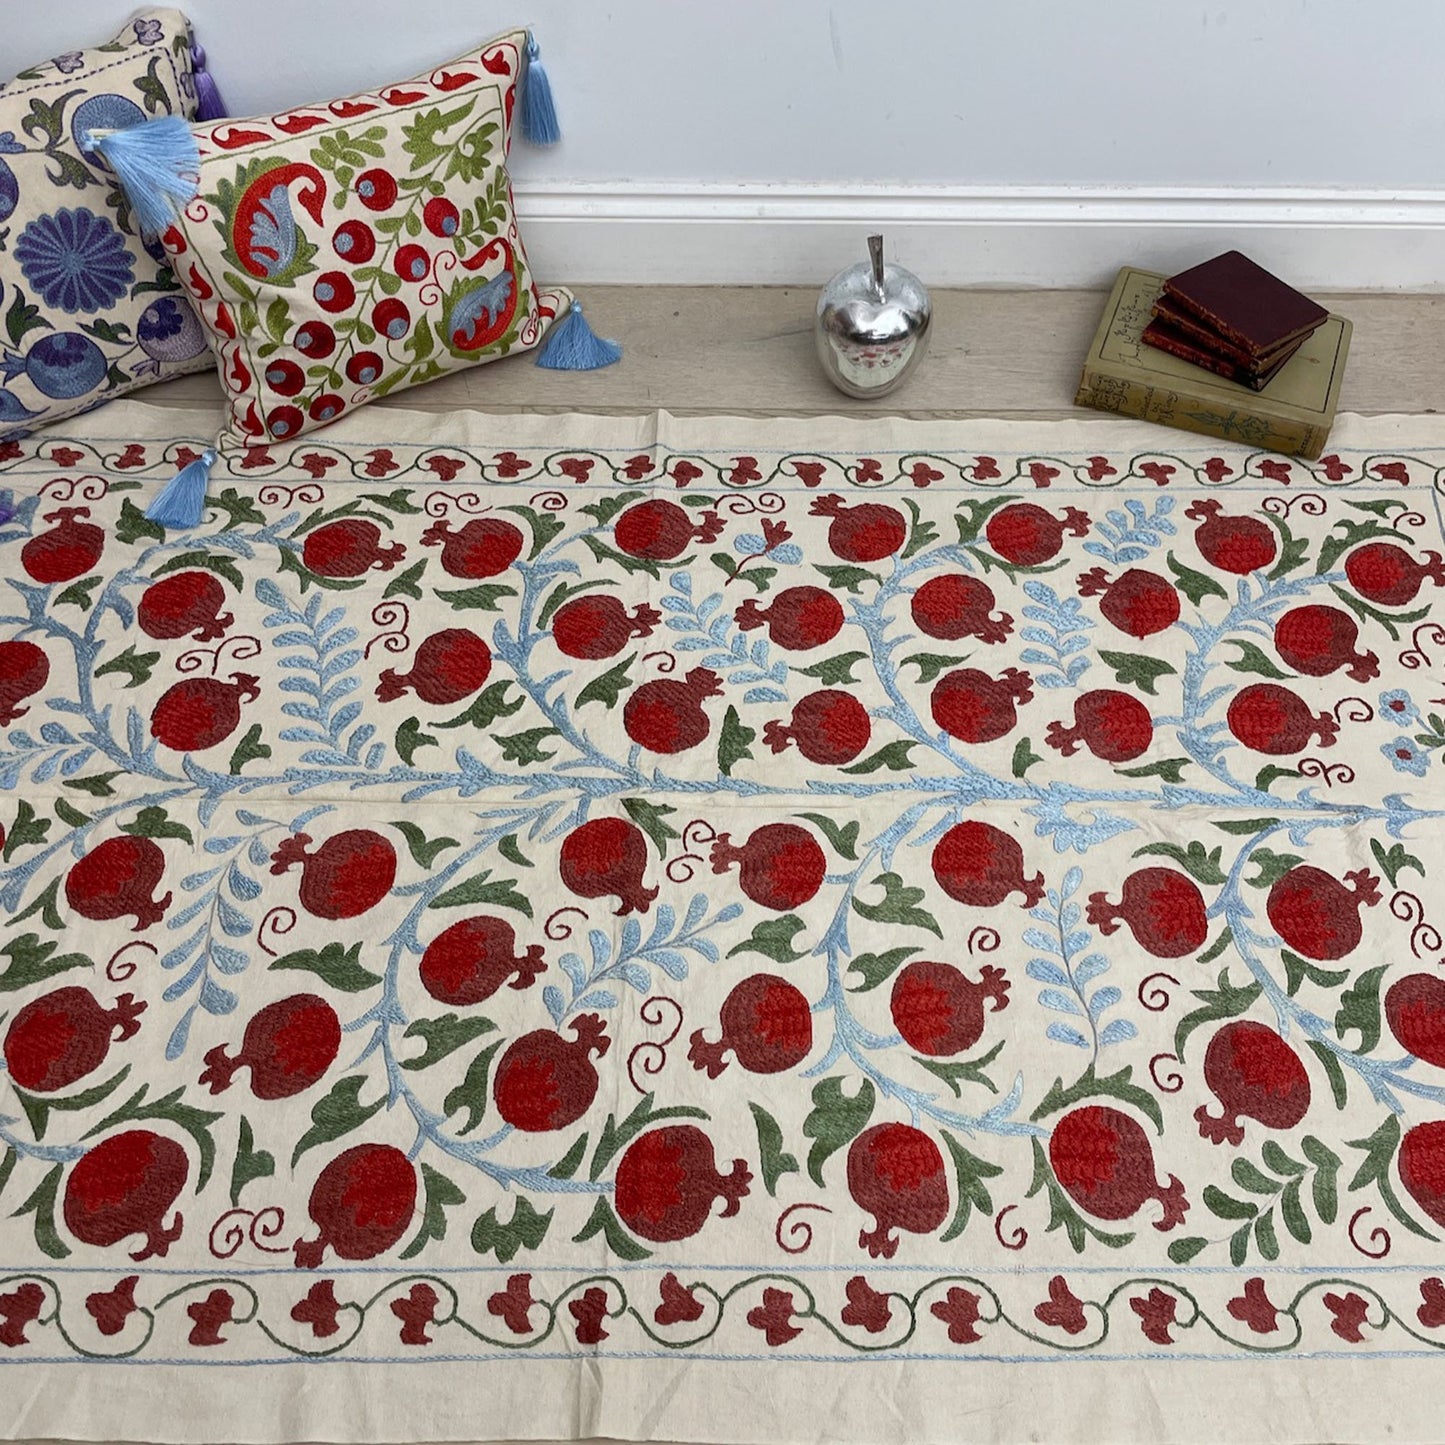 Uzbeki Suzani Hand Embroidered Textile Wall Hanging | Home Décor | Throw | 50cm x 100cm SUZ1205009 - Wildash London